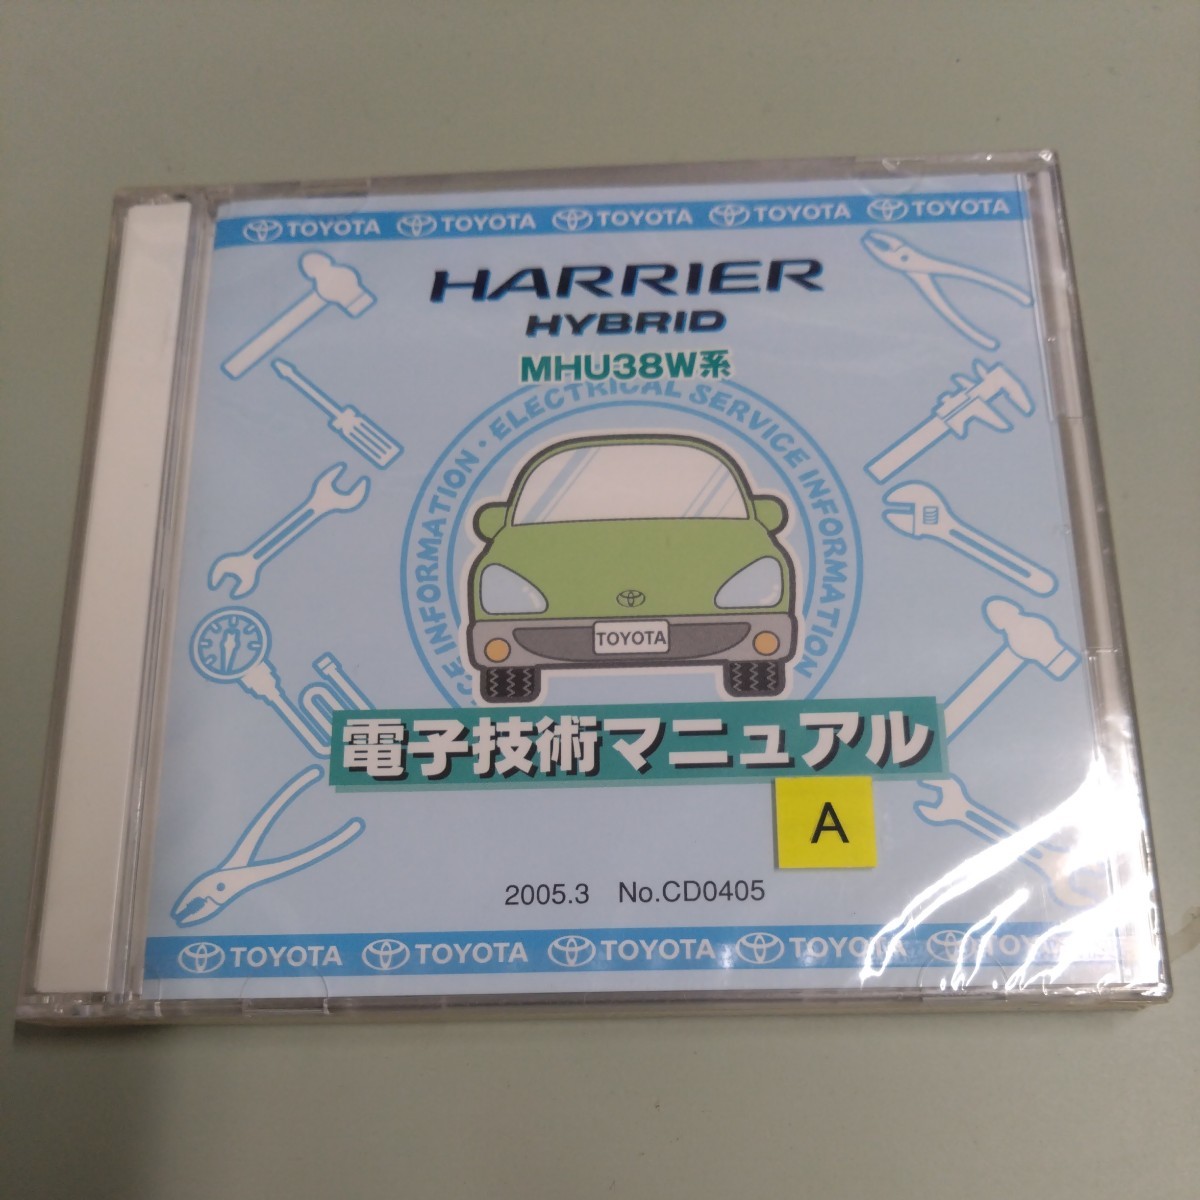  нераспечатанный Toyota электронный технология manual Harrier Hybrid 2005 год 3 месяц CD-ROM